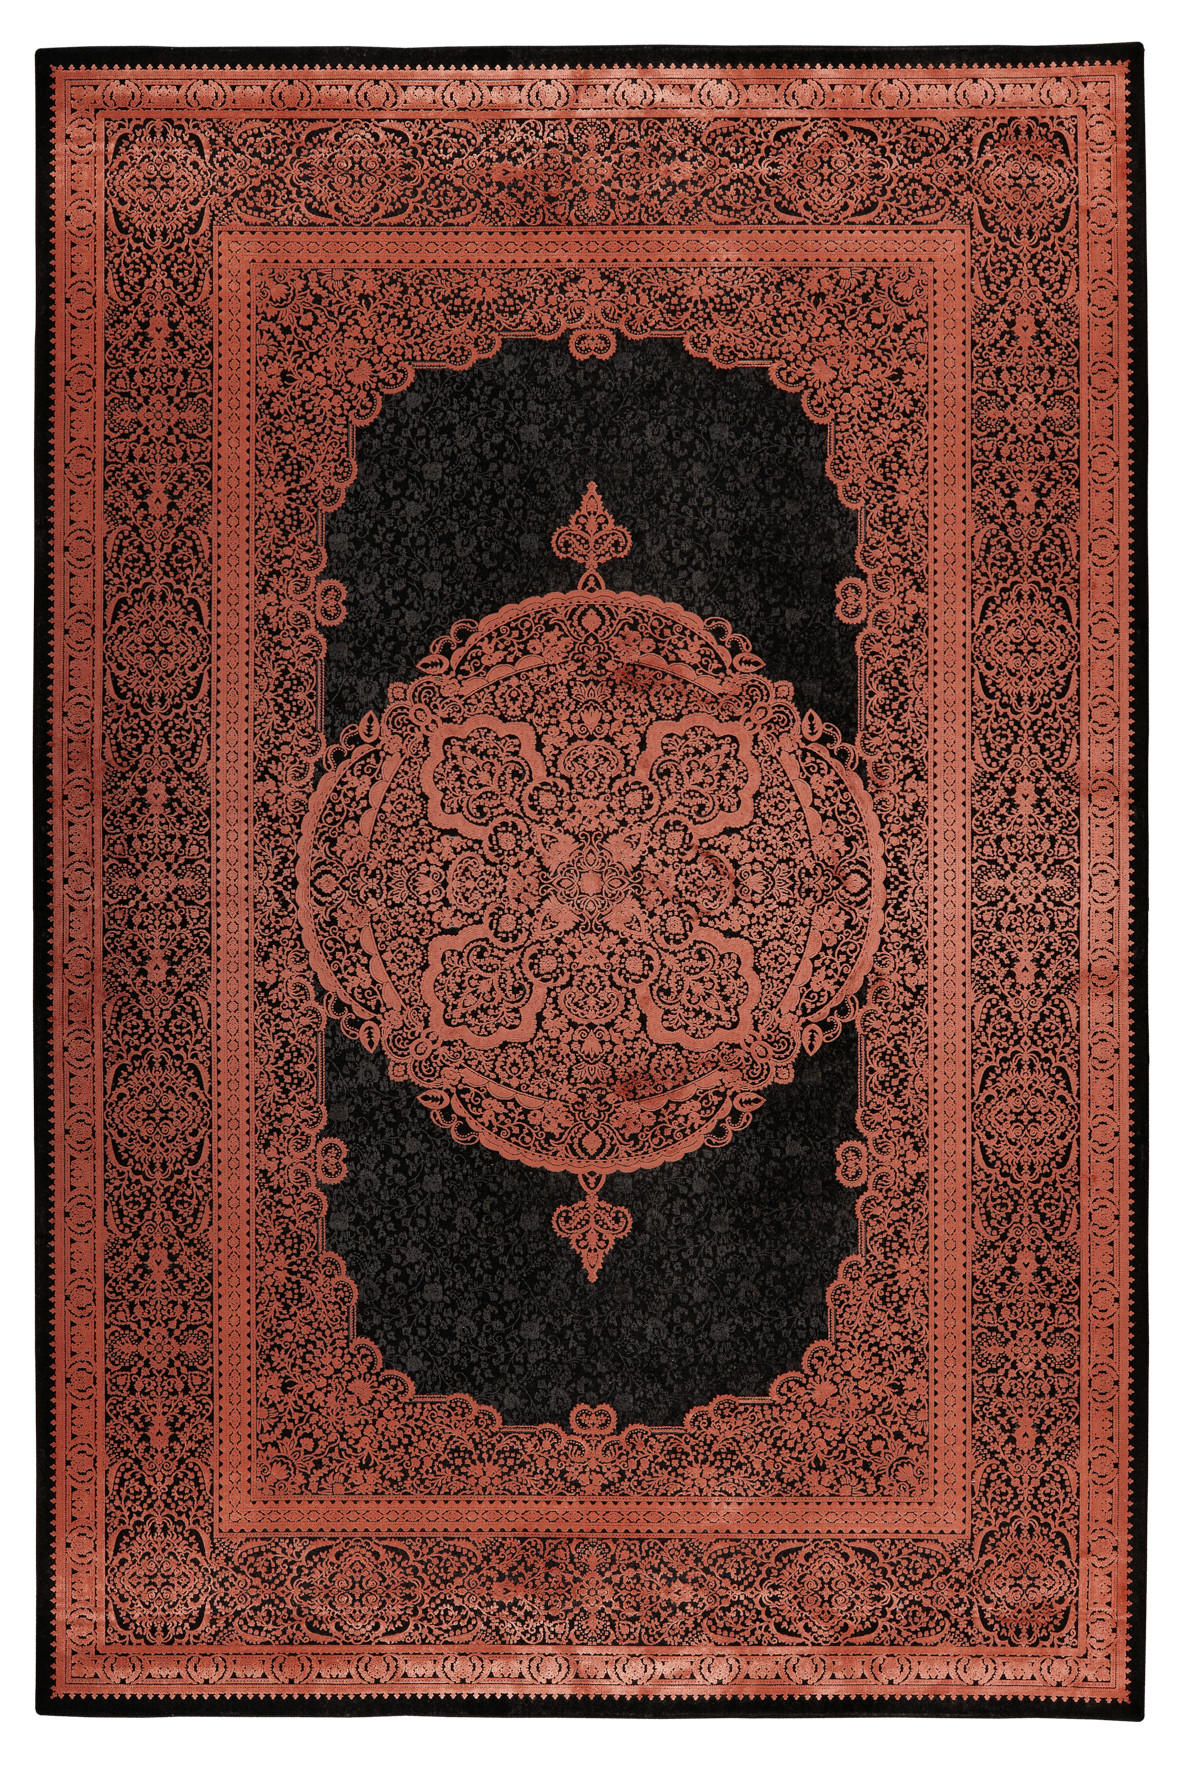 WEBTEPPICH 160/230 cm  - Rot/Dunkelorange, Design, Textil (160/230cm) - Novel